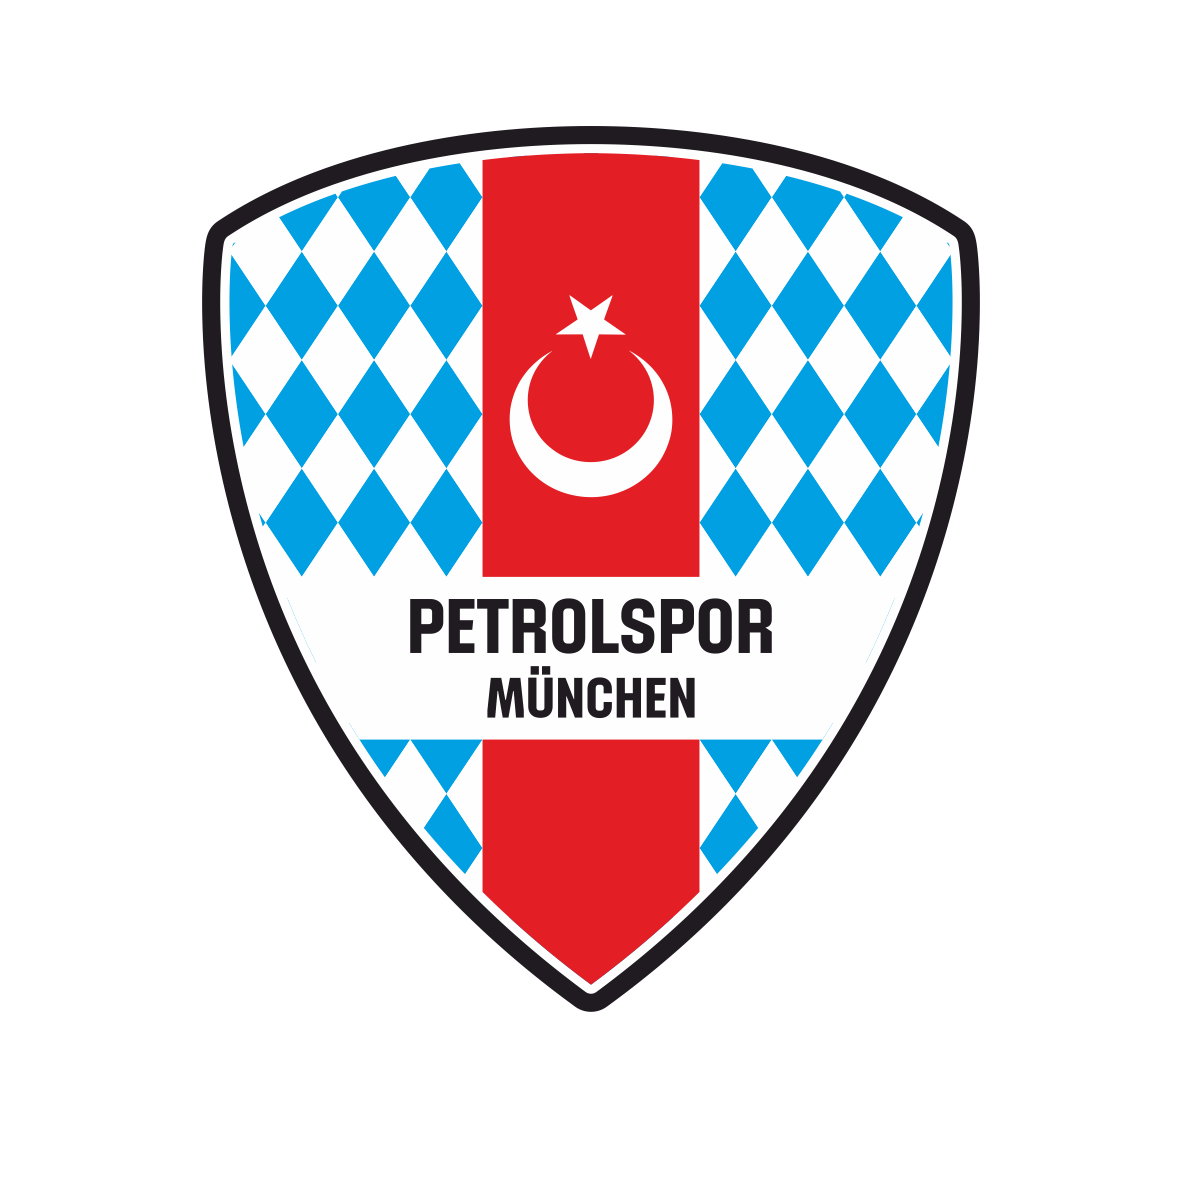 Petrolspor München